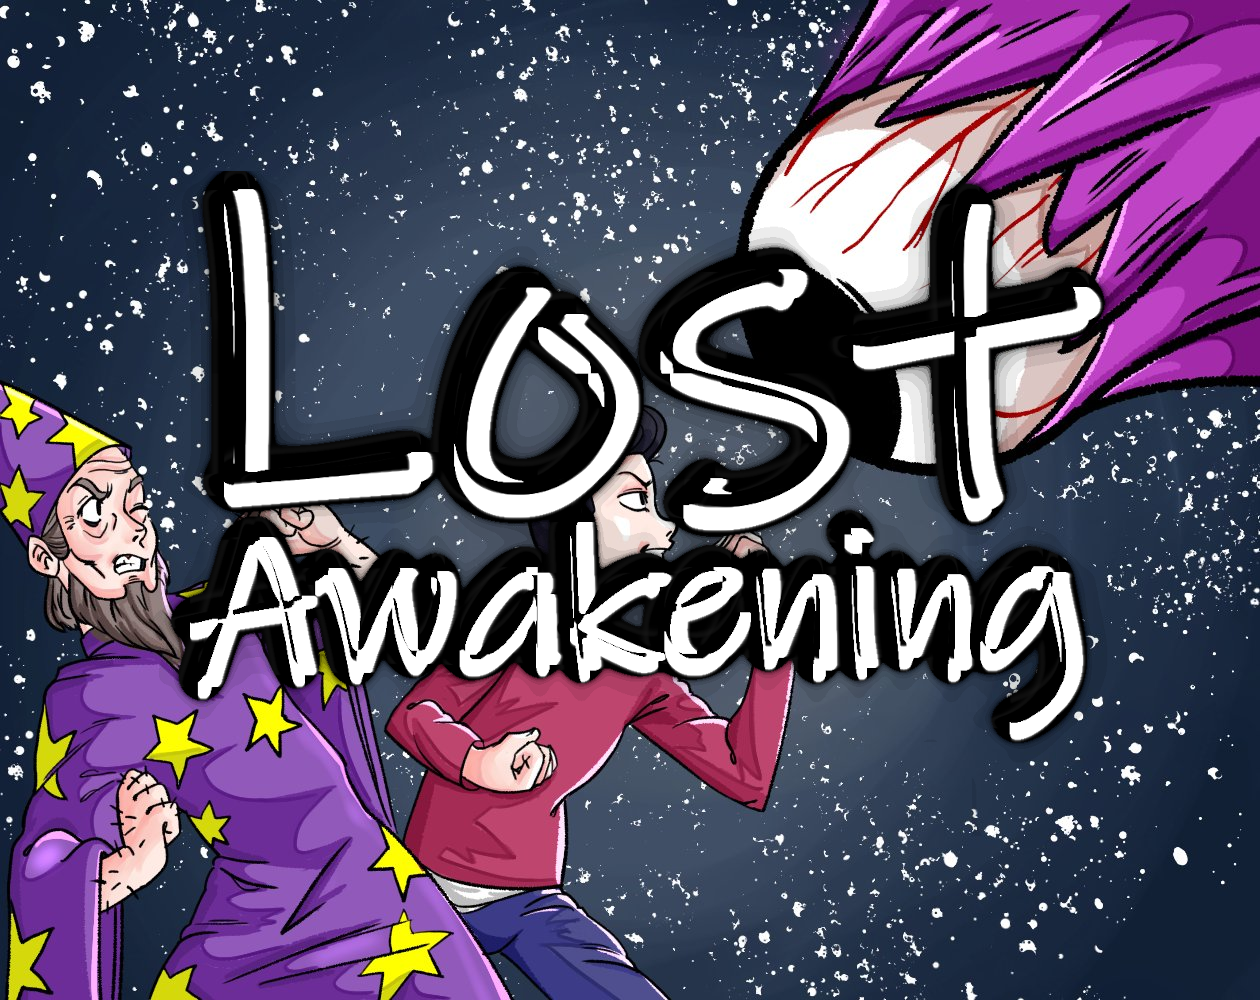 Lost Awakening, Chapter 3 Presskit Image